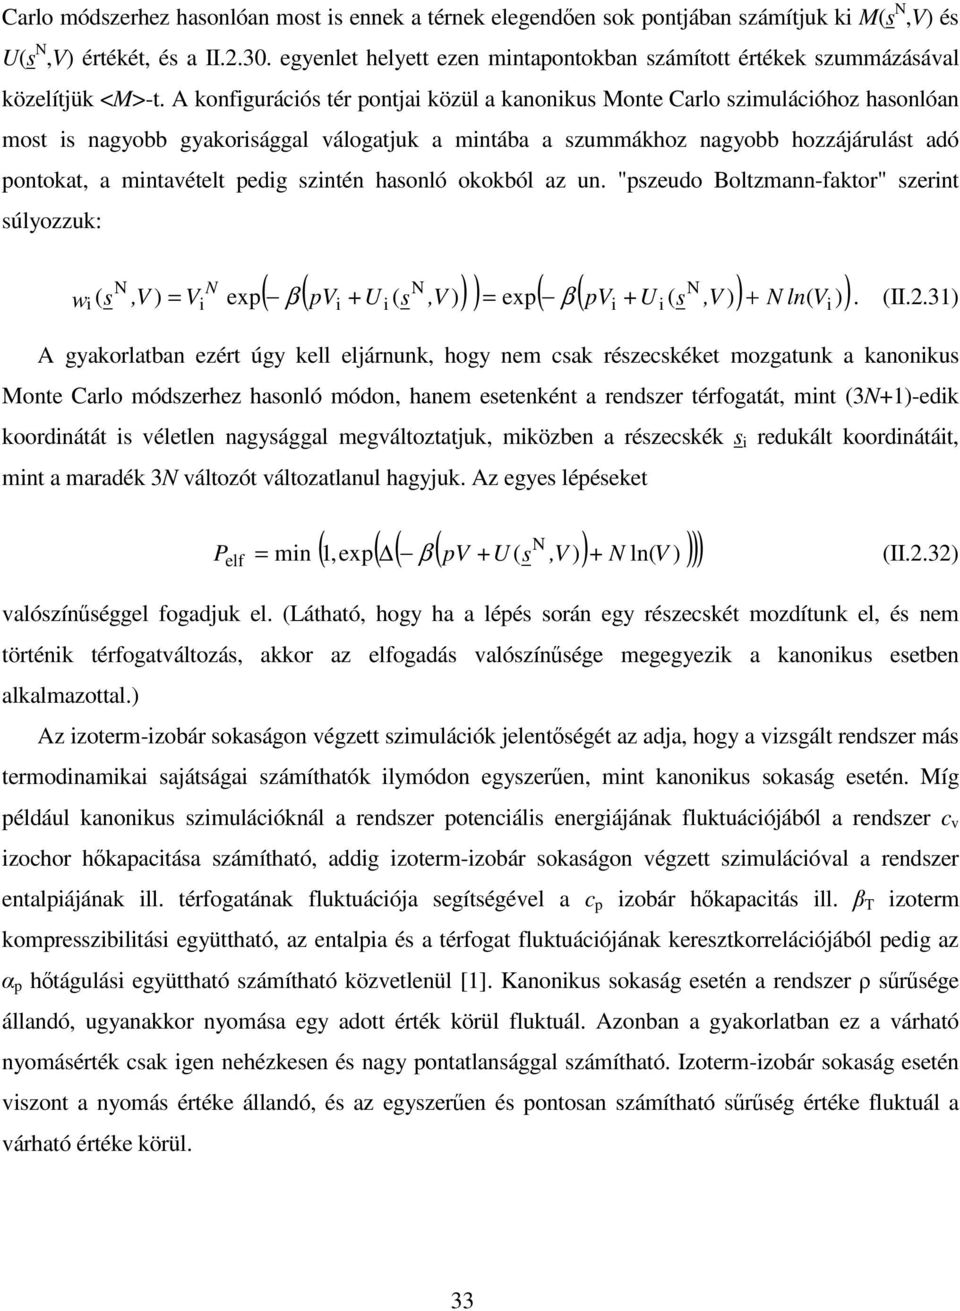 un. "pzeudo Boltzmann-fakto" zent úlyozzuk: p +U, p +U, + ln w,. II.2.